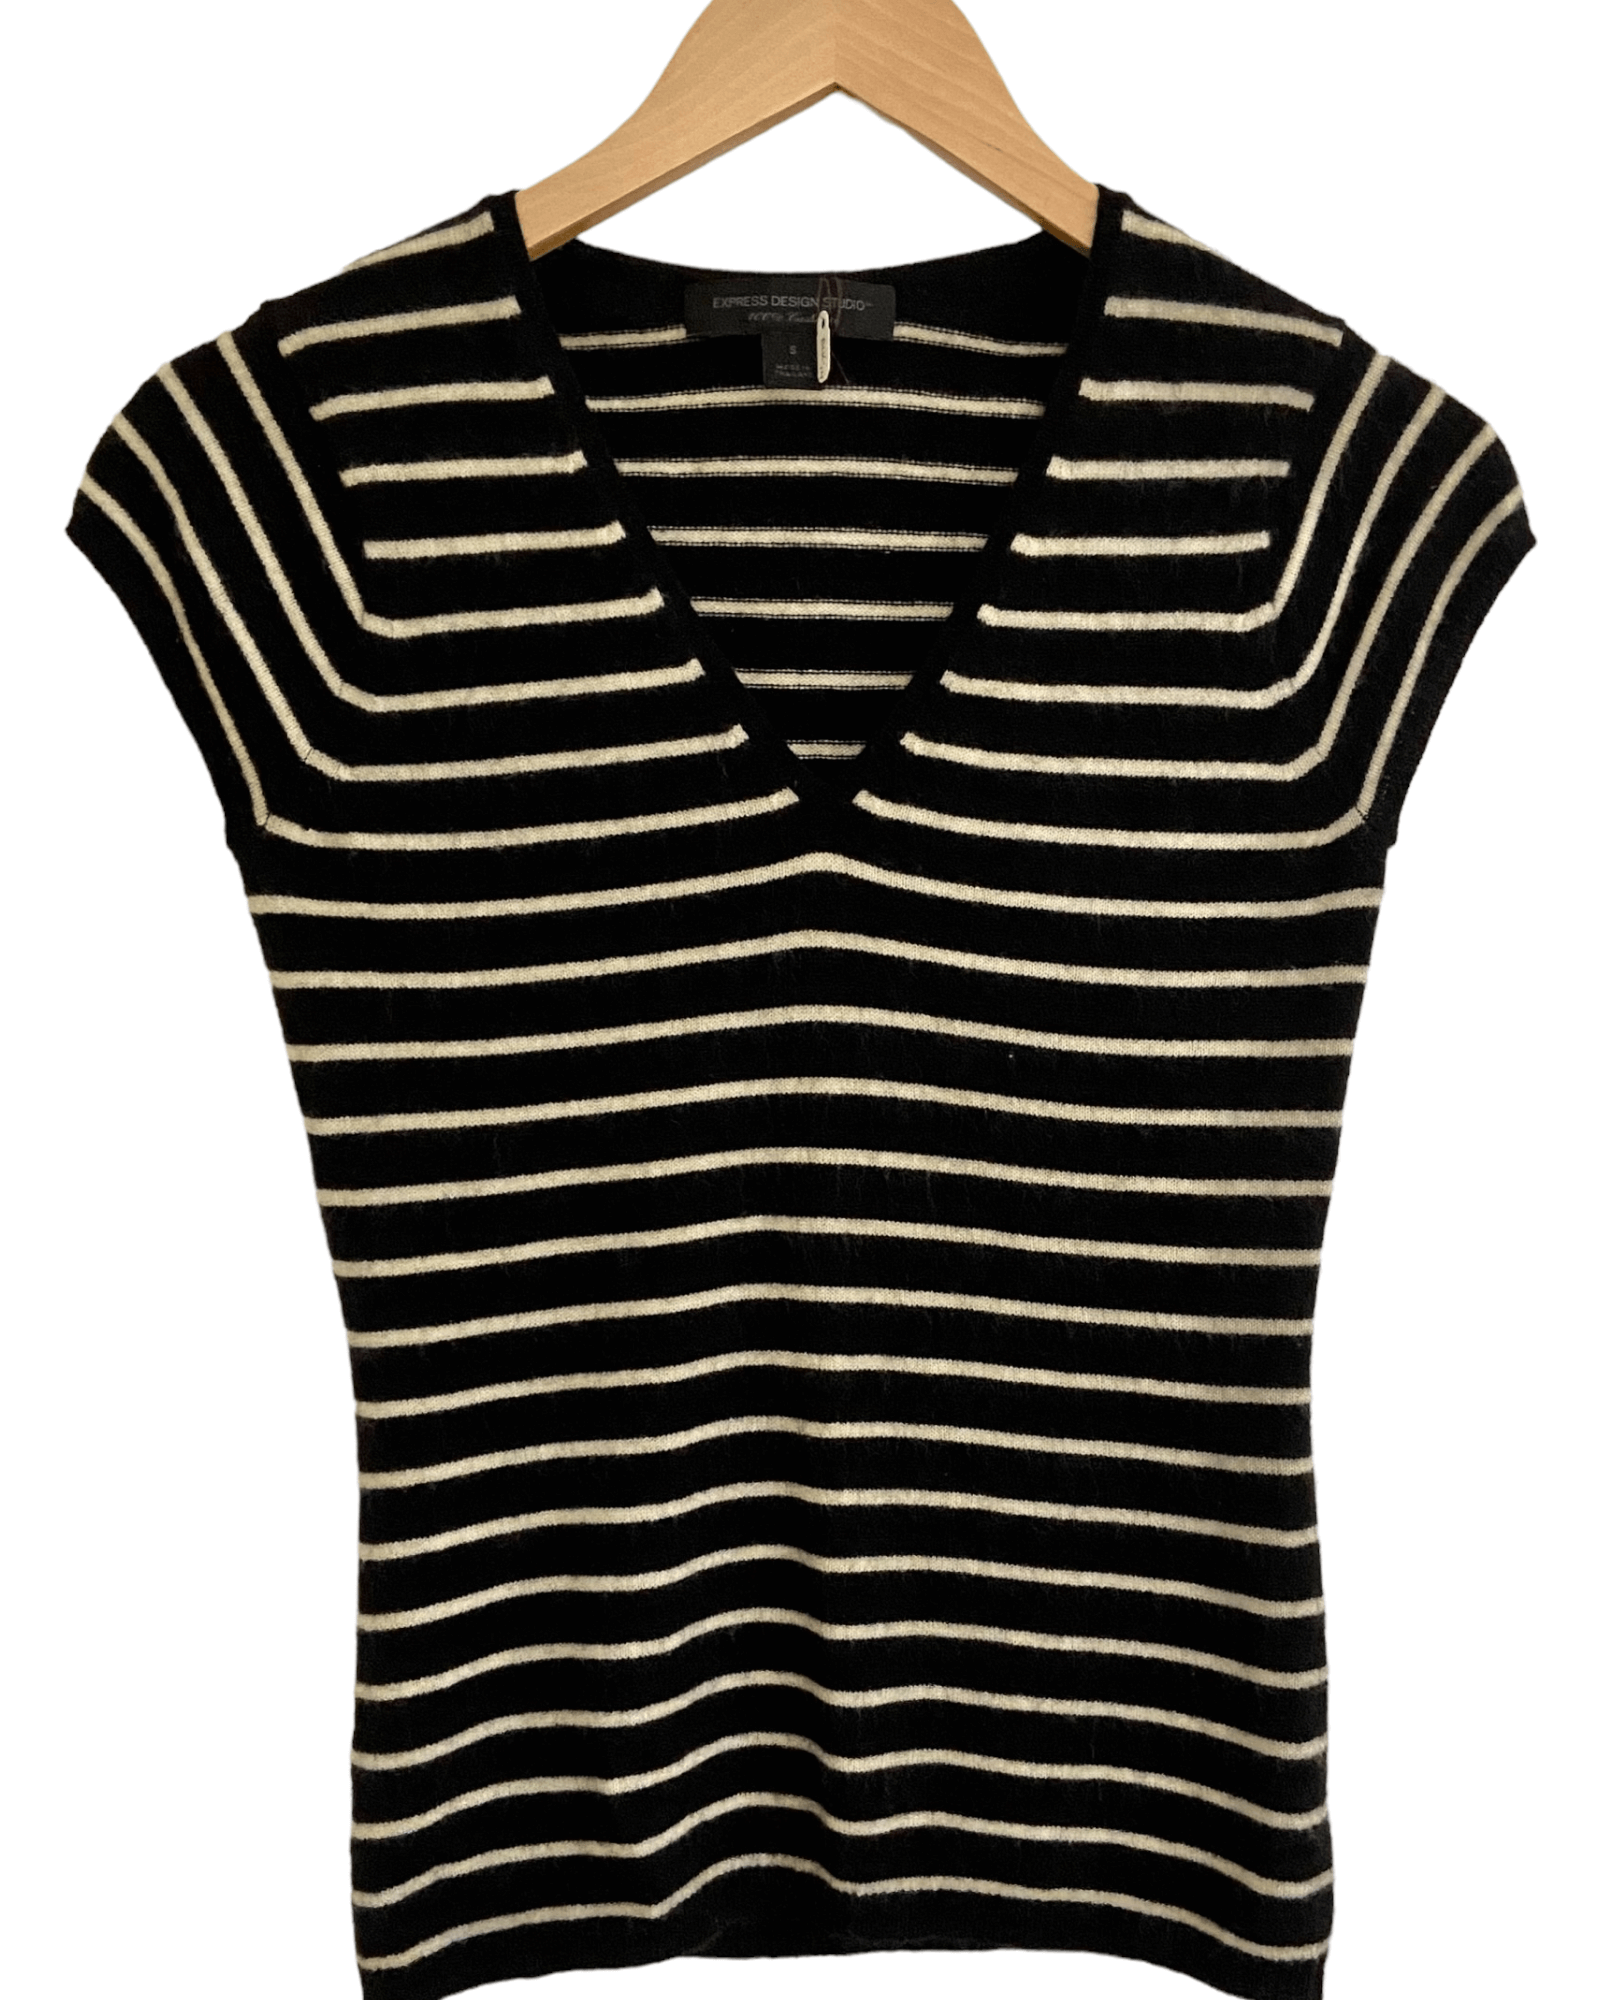 Dark Winter EXPRESS DESIGN STUDIO striped v-neck cashmere sweater